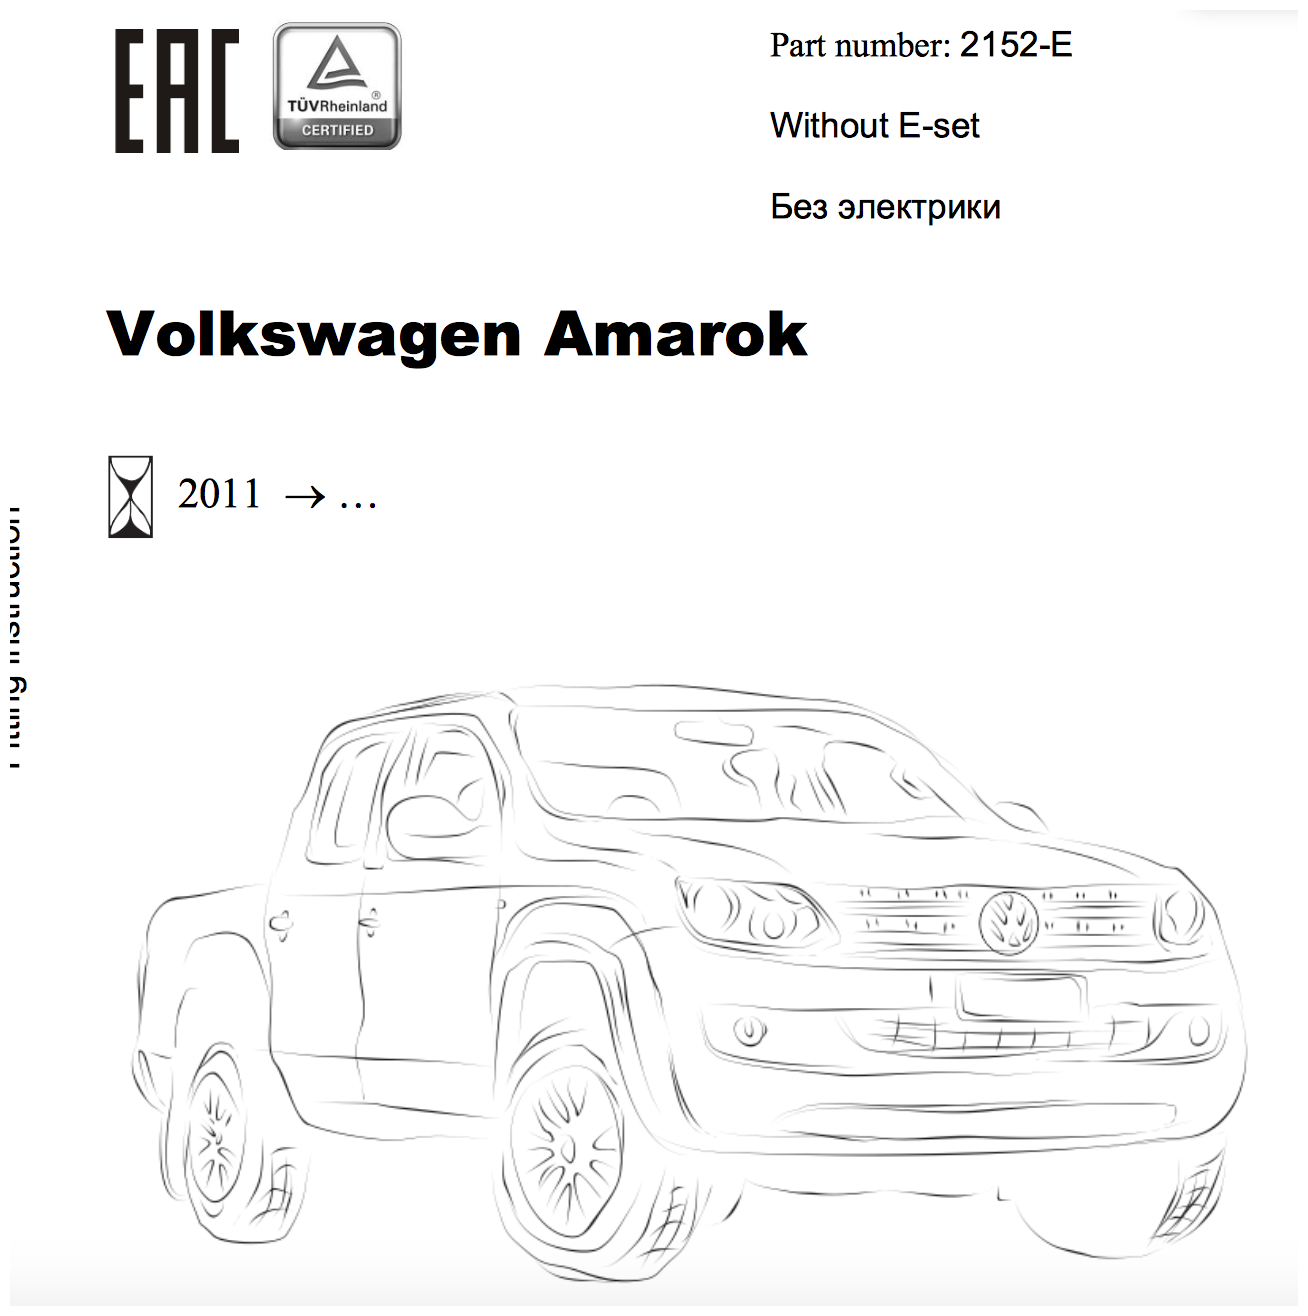 Фаркоп на Volkswagen Amarok 2152-E